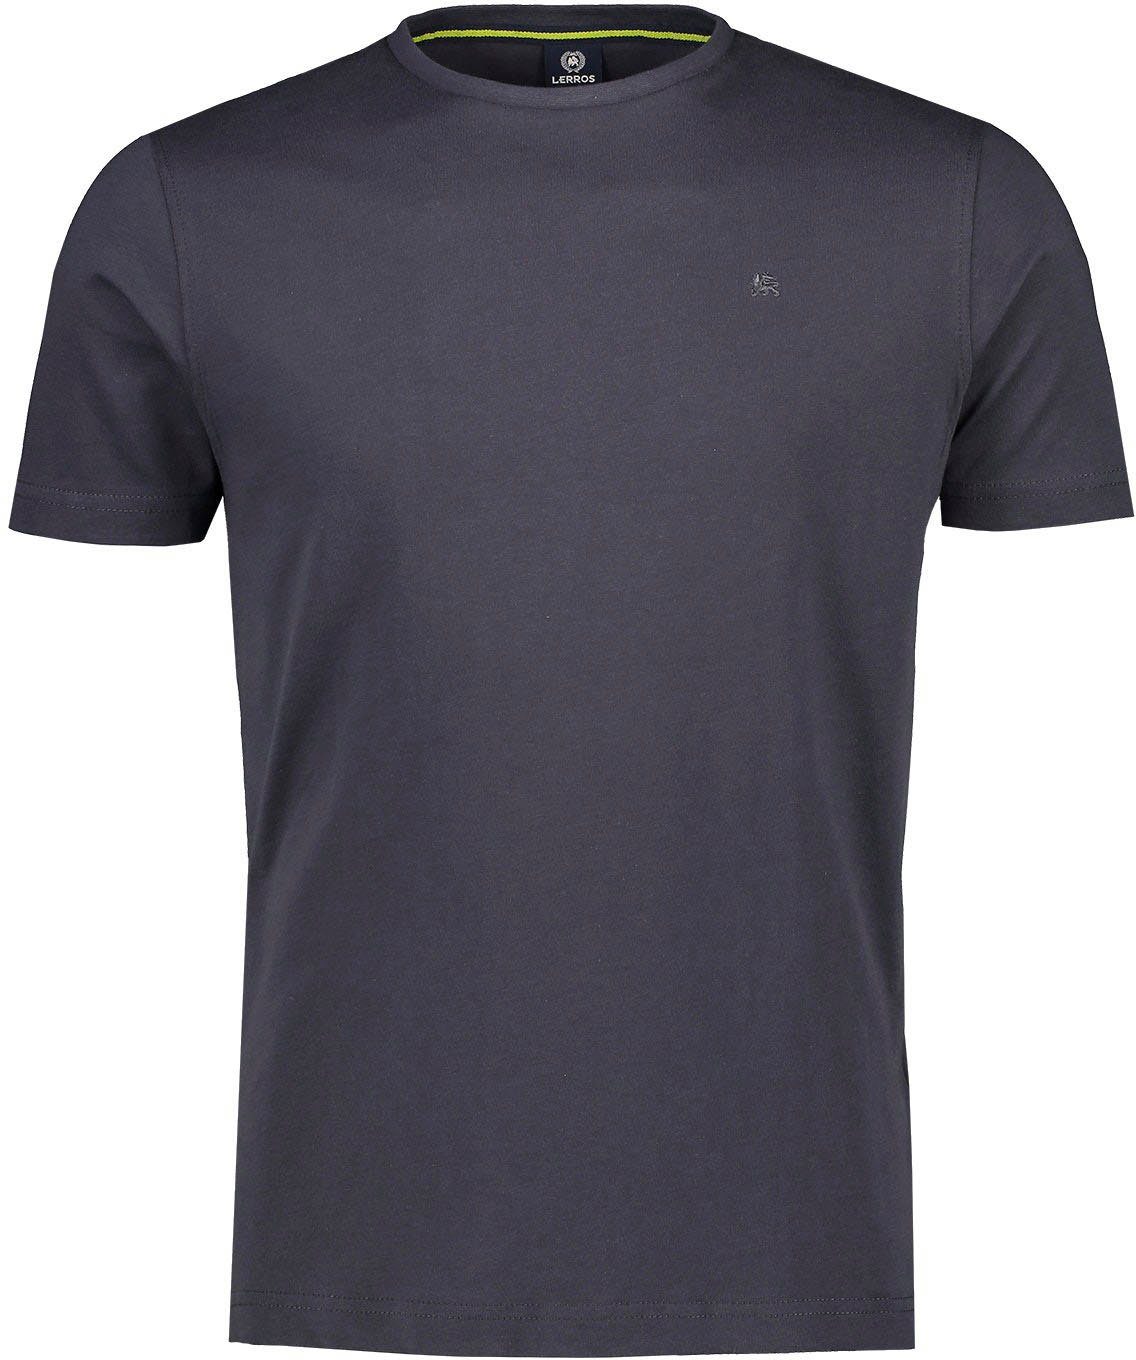 LERROS T-Shirt im Basic-Look rock grey